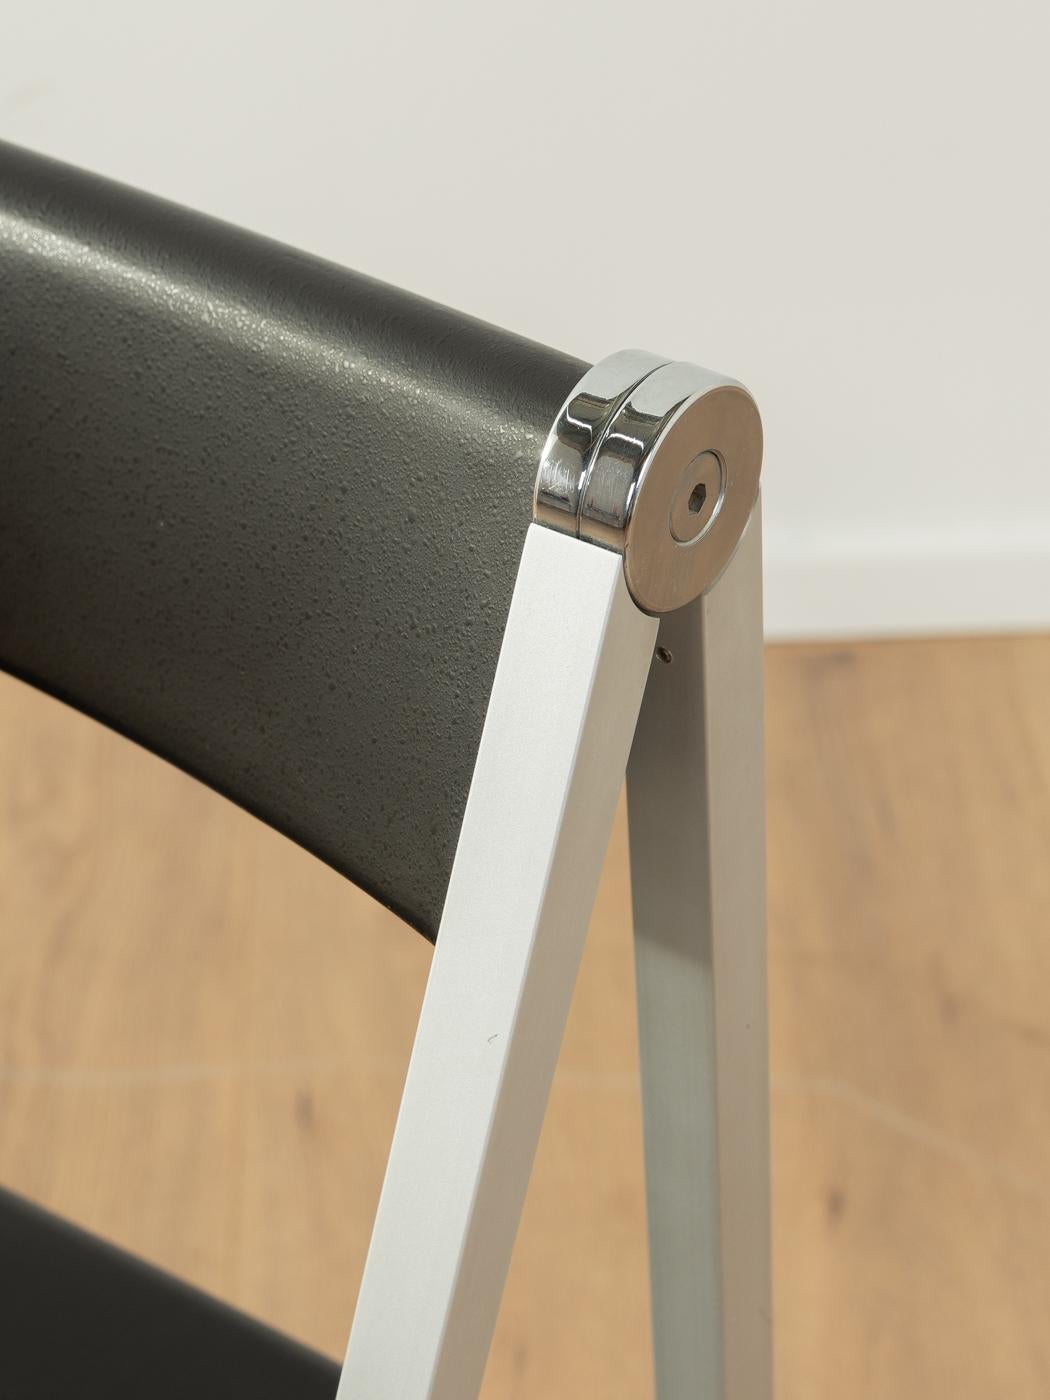 2x Team Form AG for interlübke folding chairs, Swiss Design 3